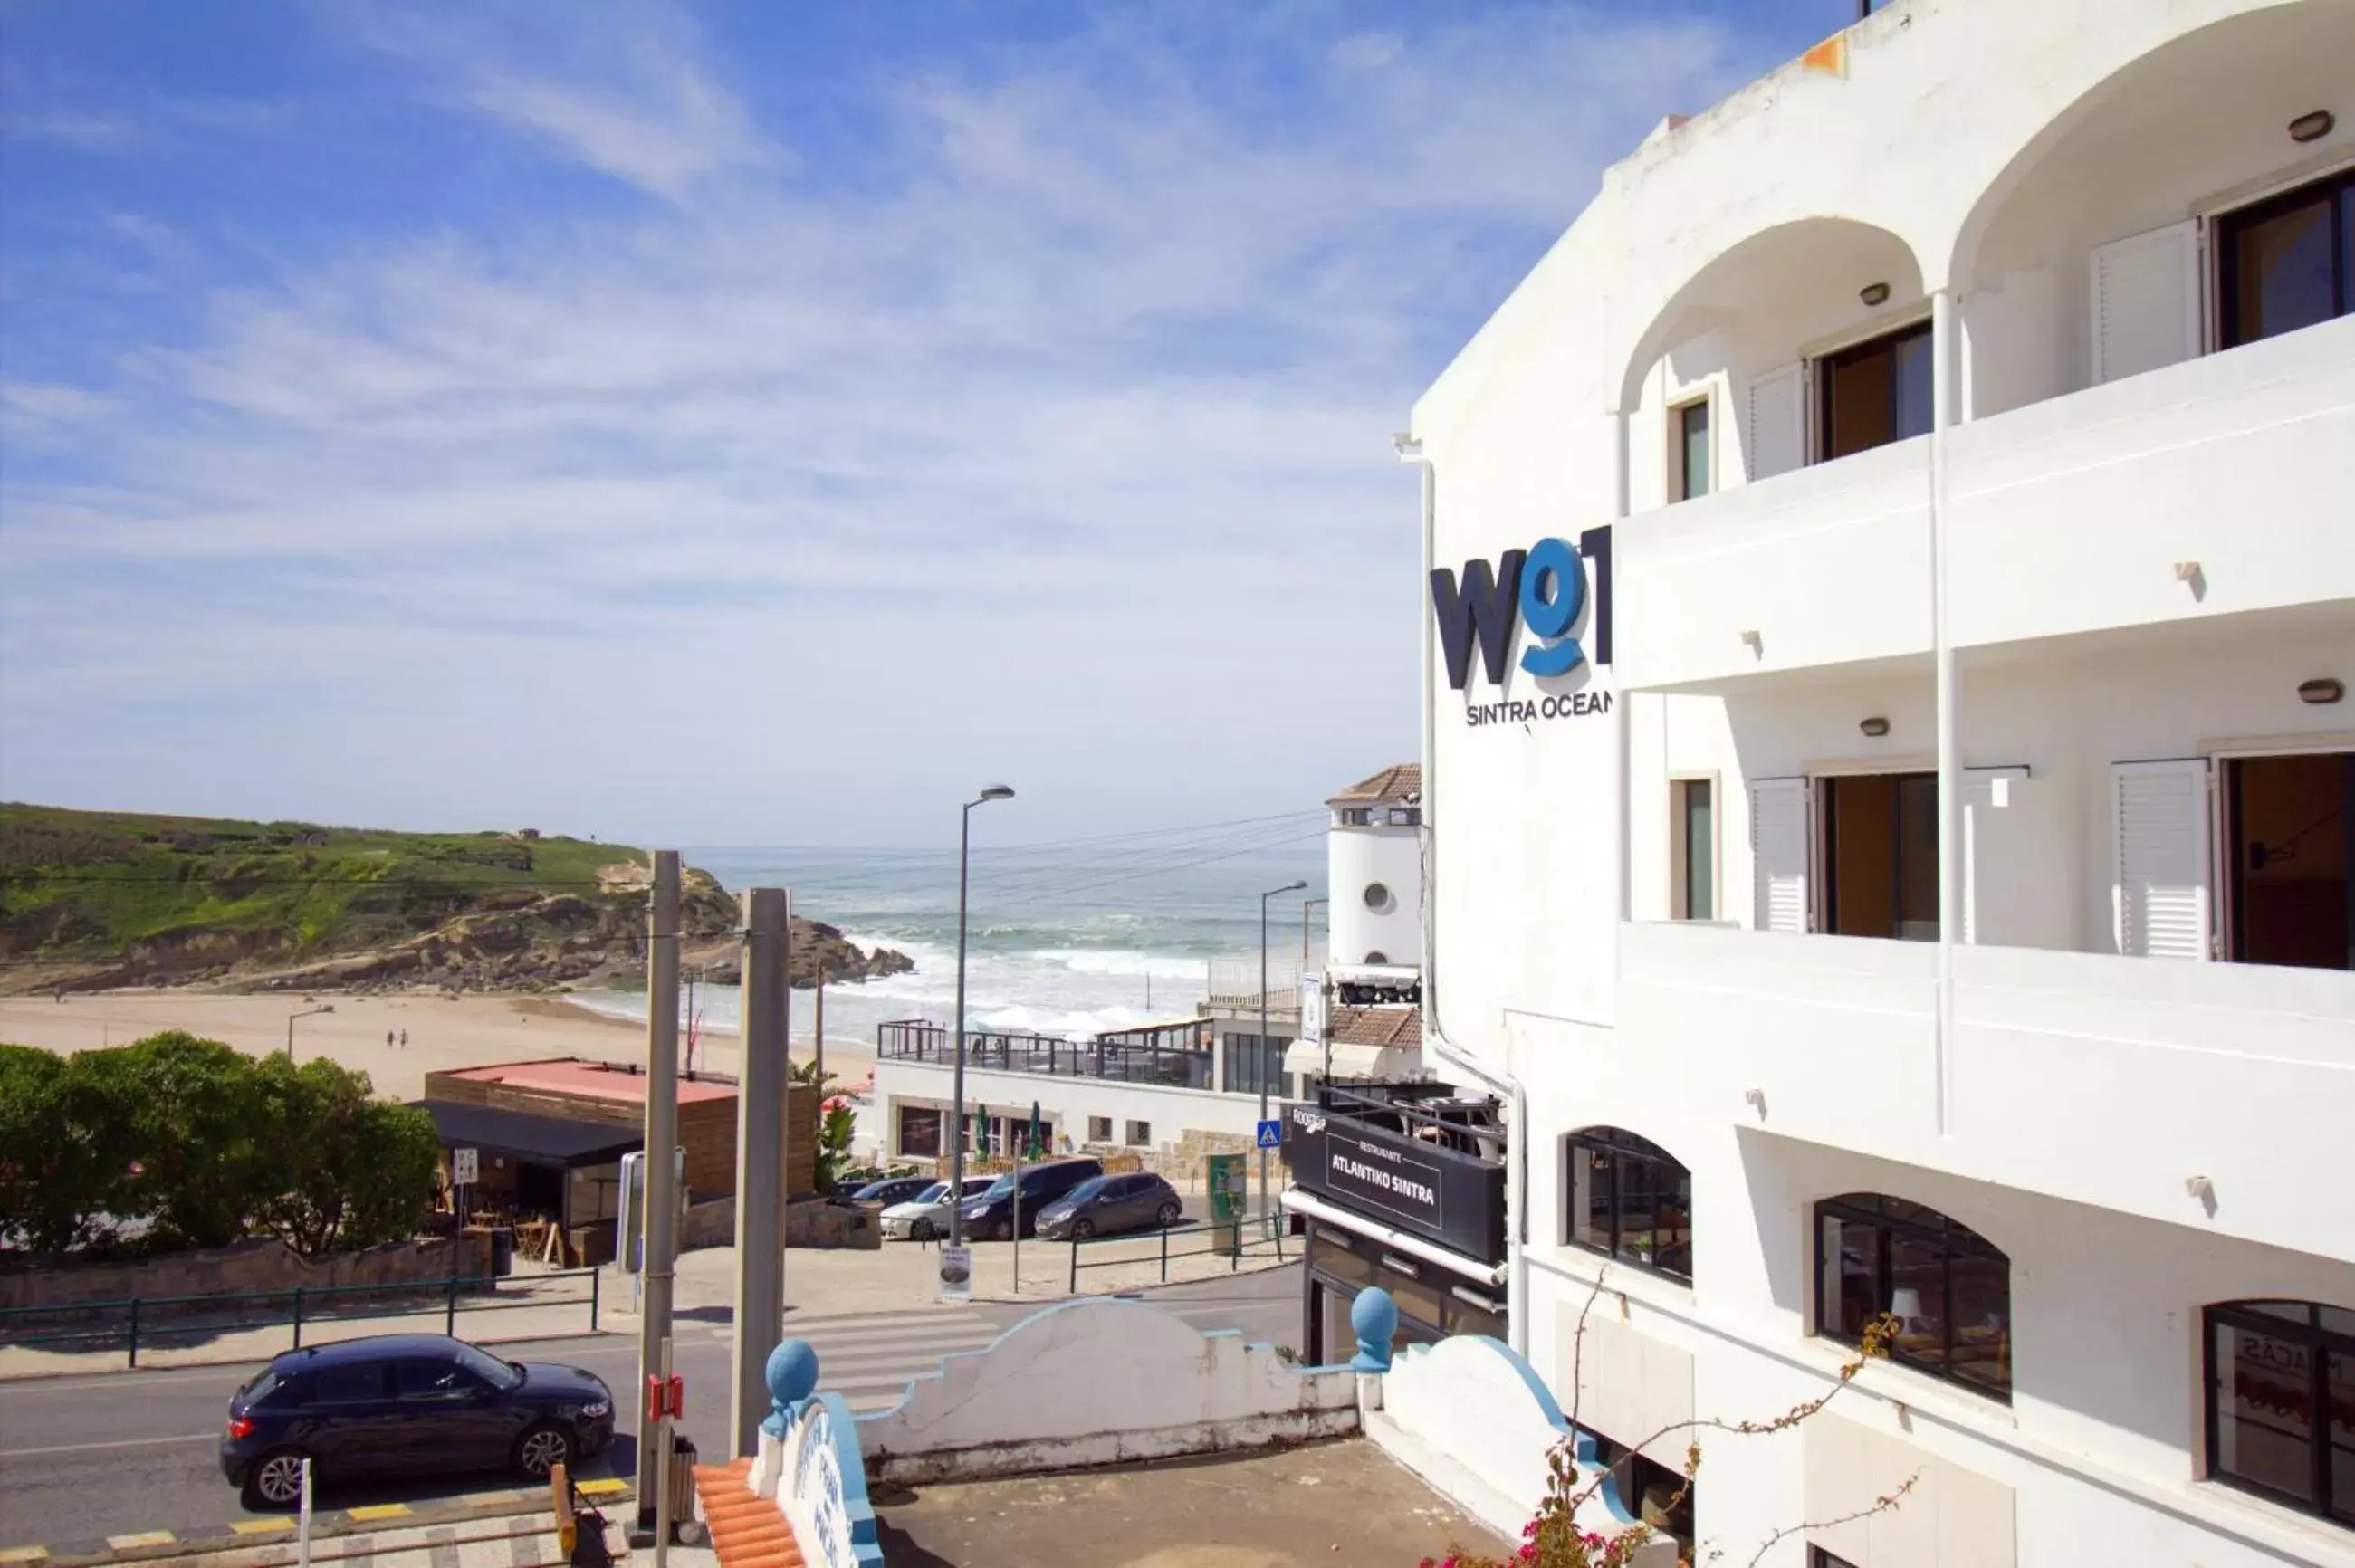 Property building in WOT Sintra Ocean